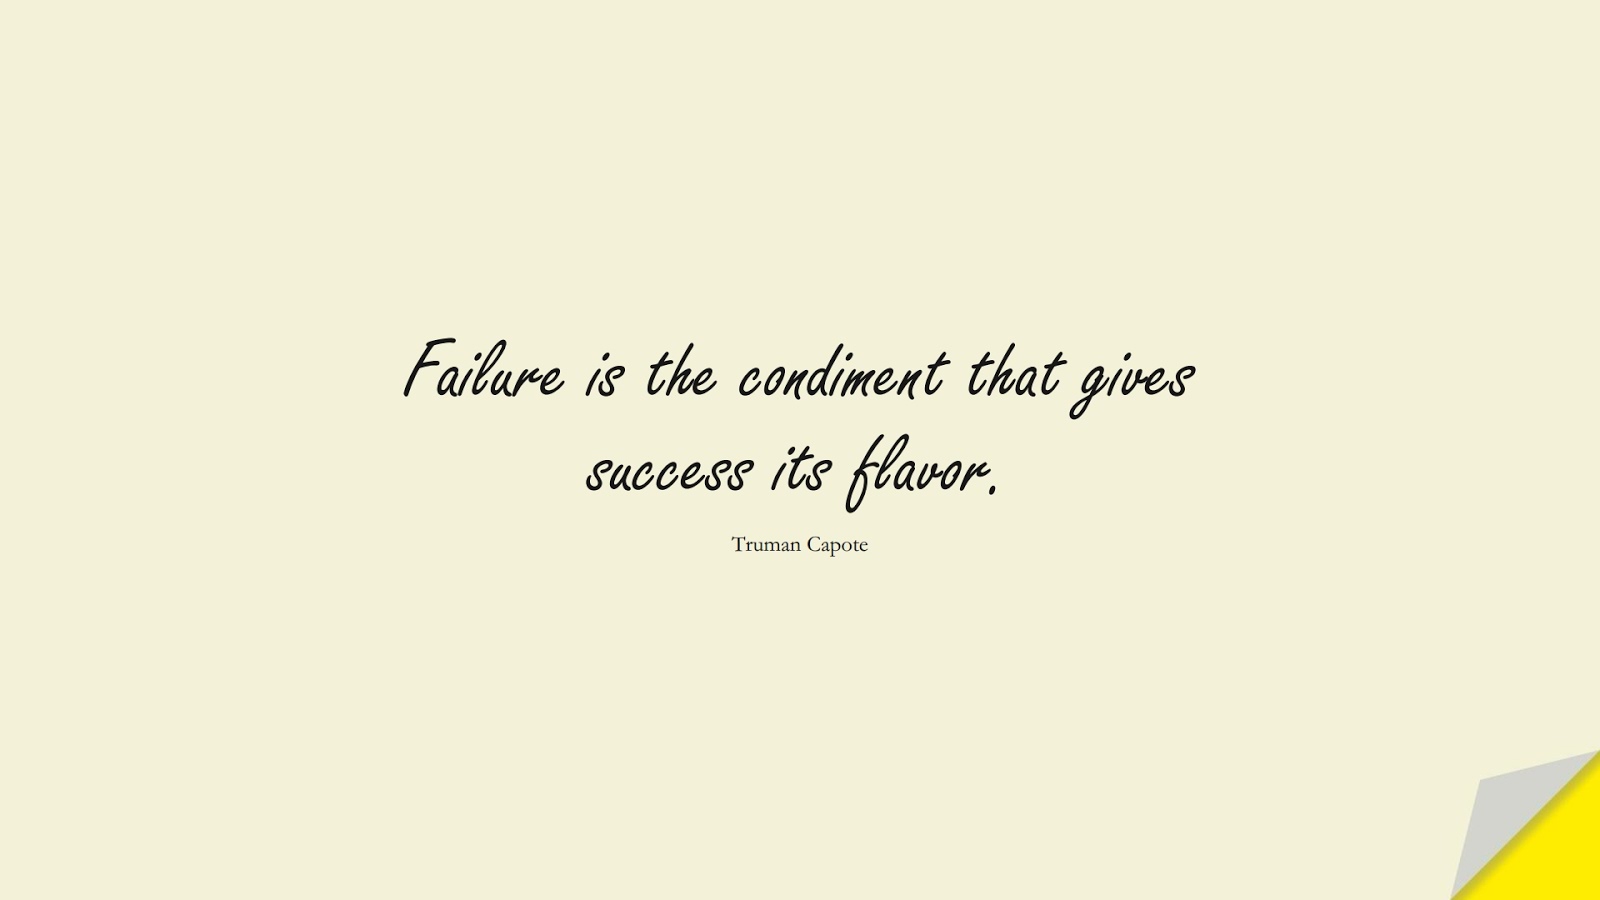 Failure is the condiment that gives success its flavor. (Truman Capote);  #SuccessQuotes